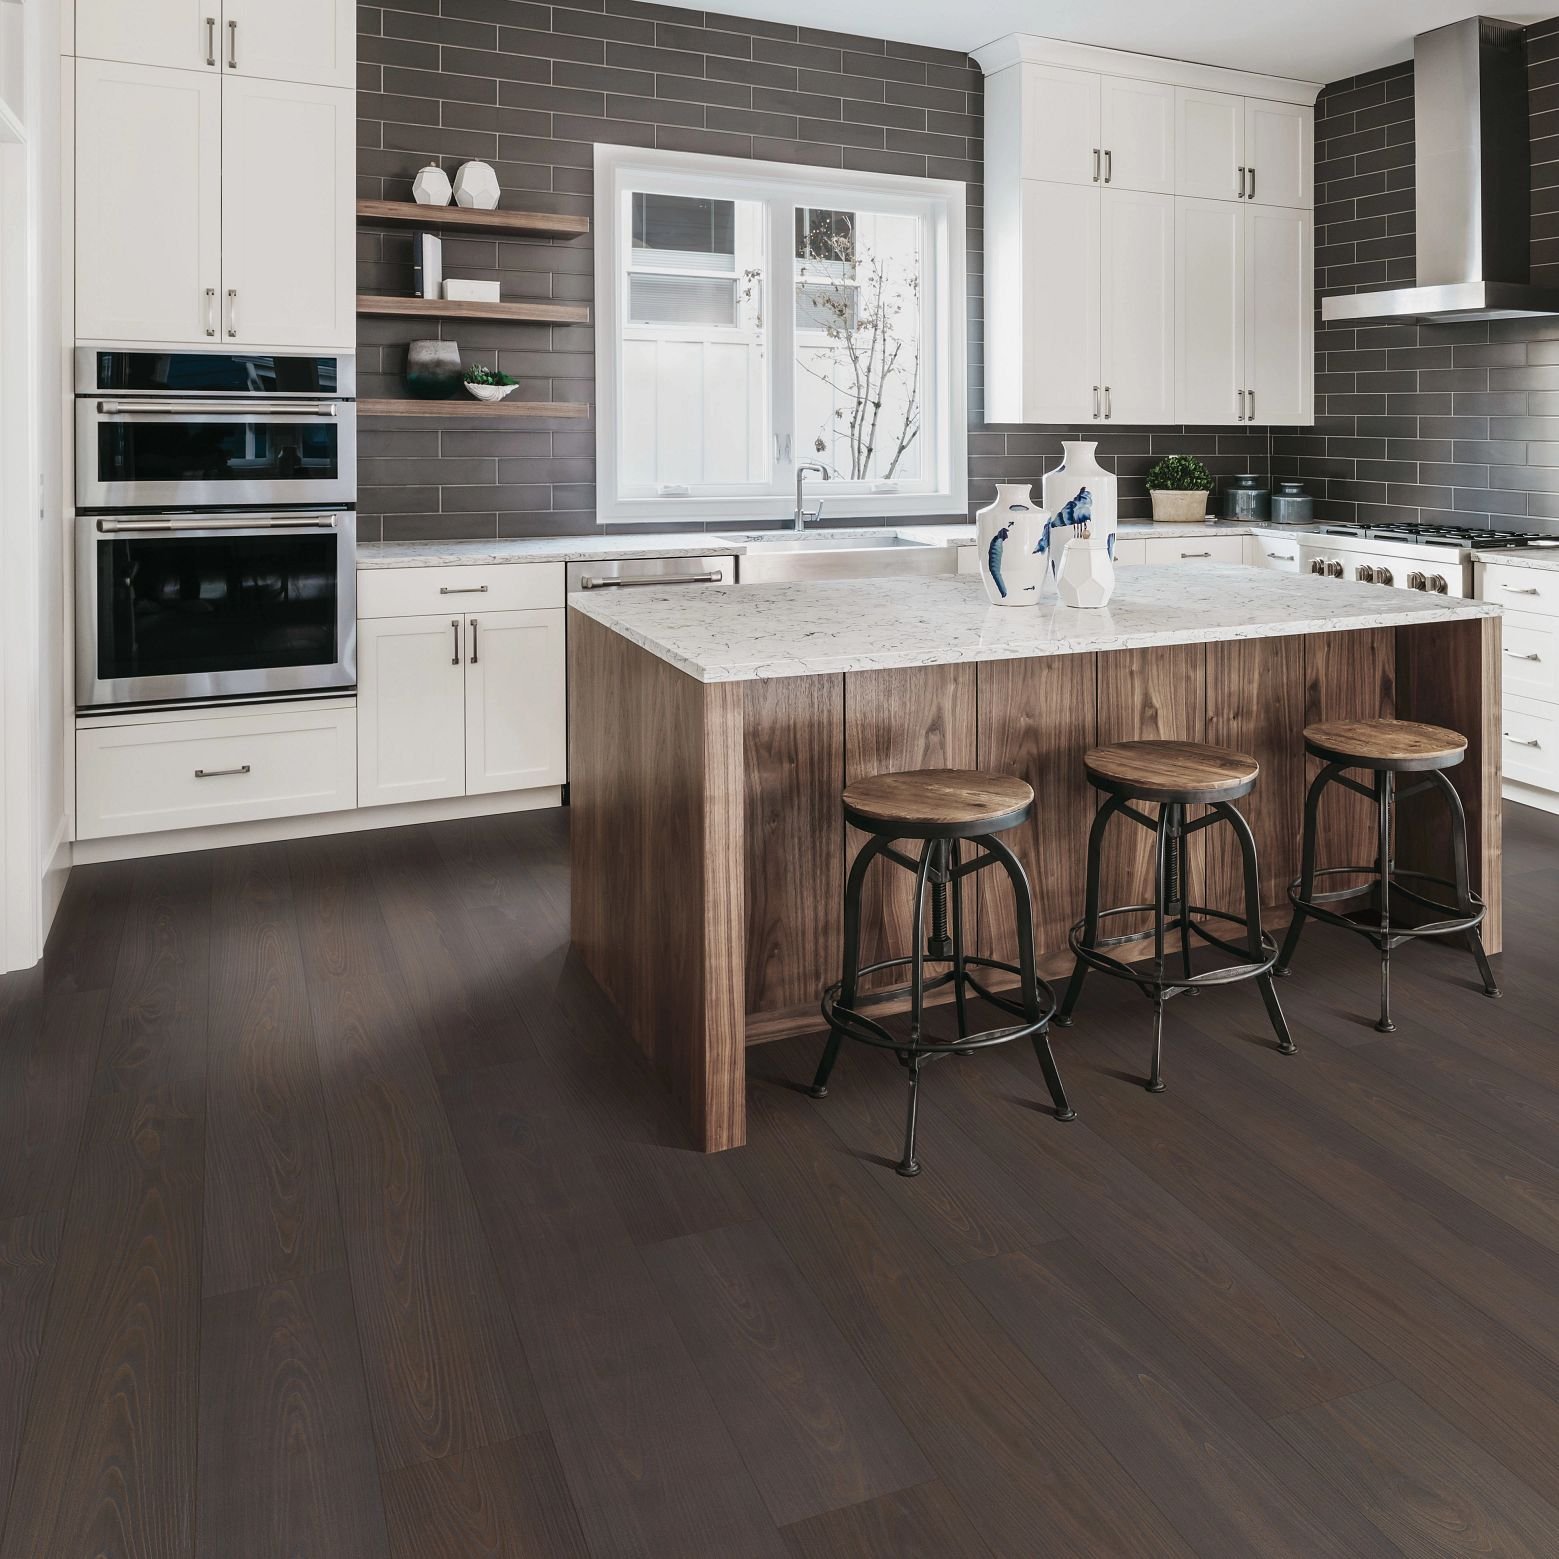 Kitchen with hardwood flooring from Carpet Villa in Grand Rapids, MI